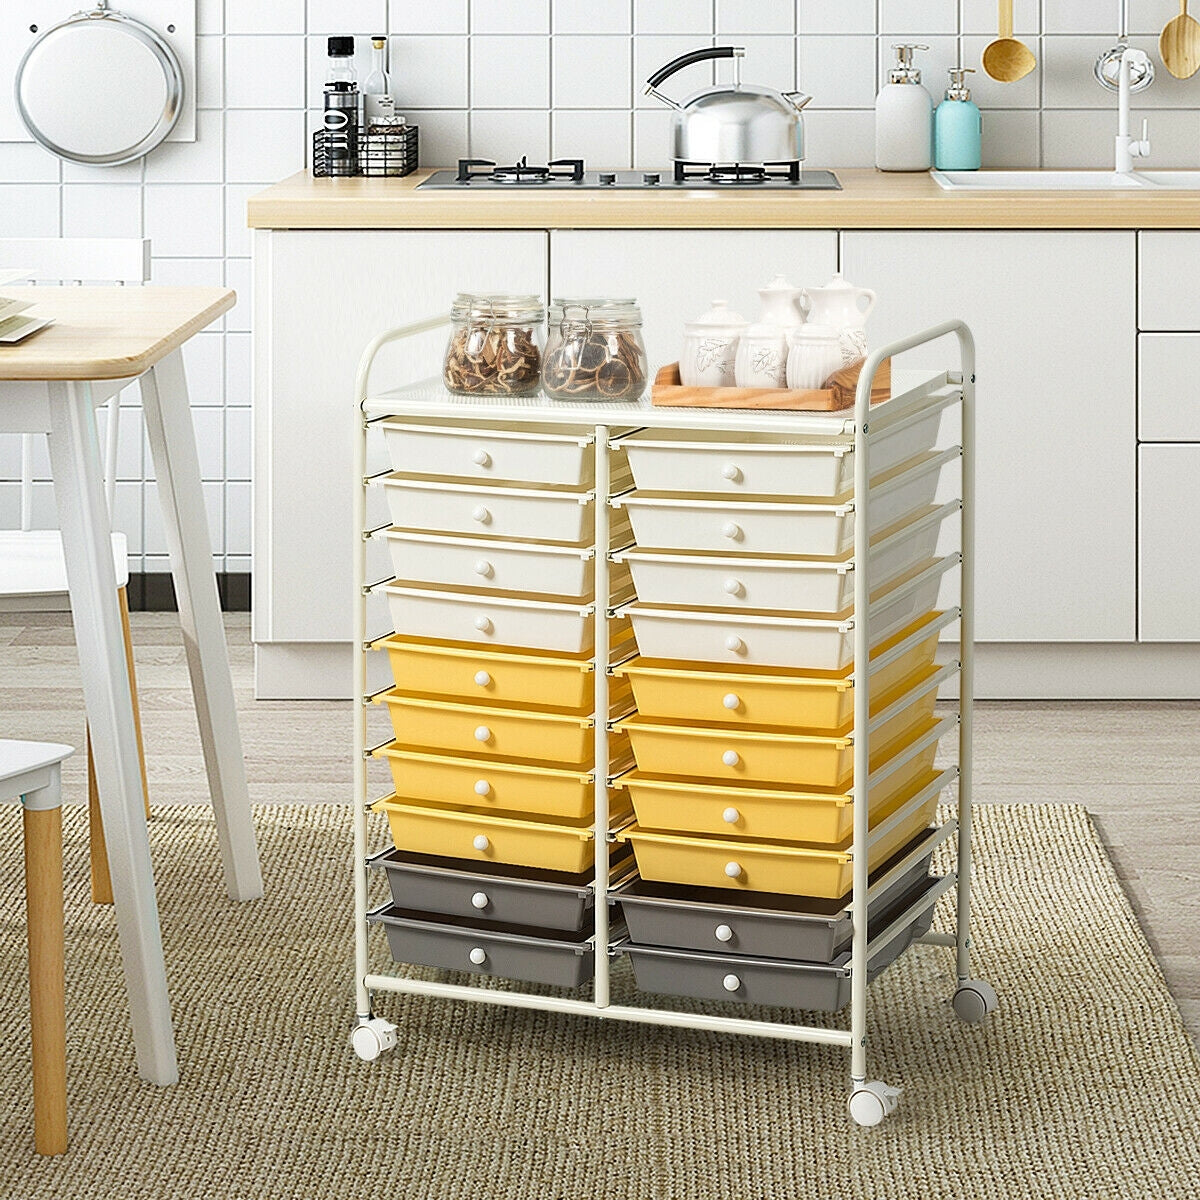 20 Drawers Storage Rolling Cart Studio Organizer-Yellow